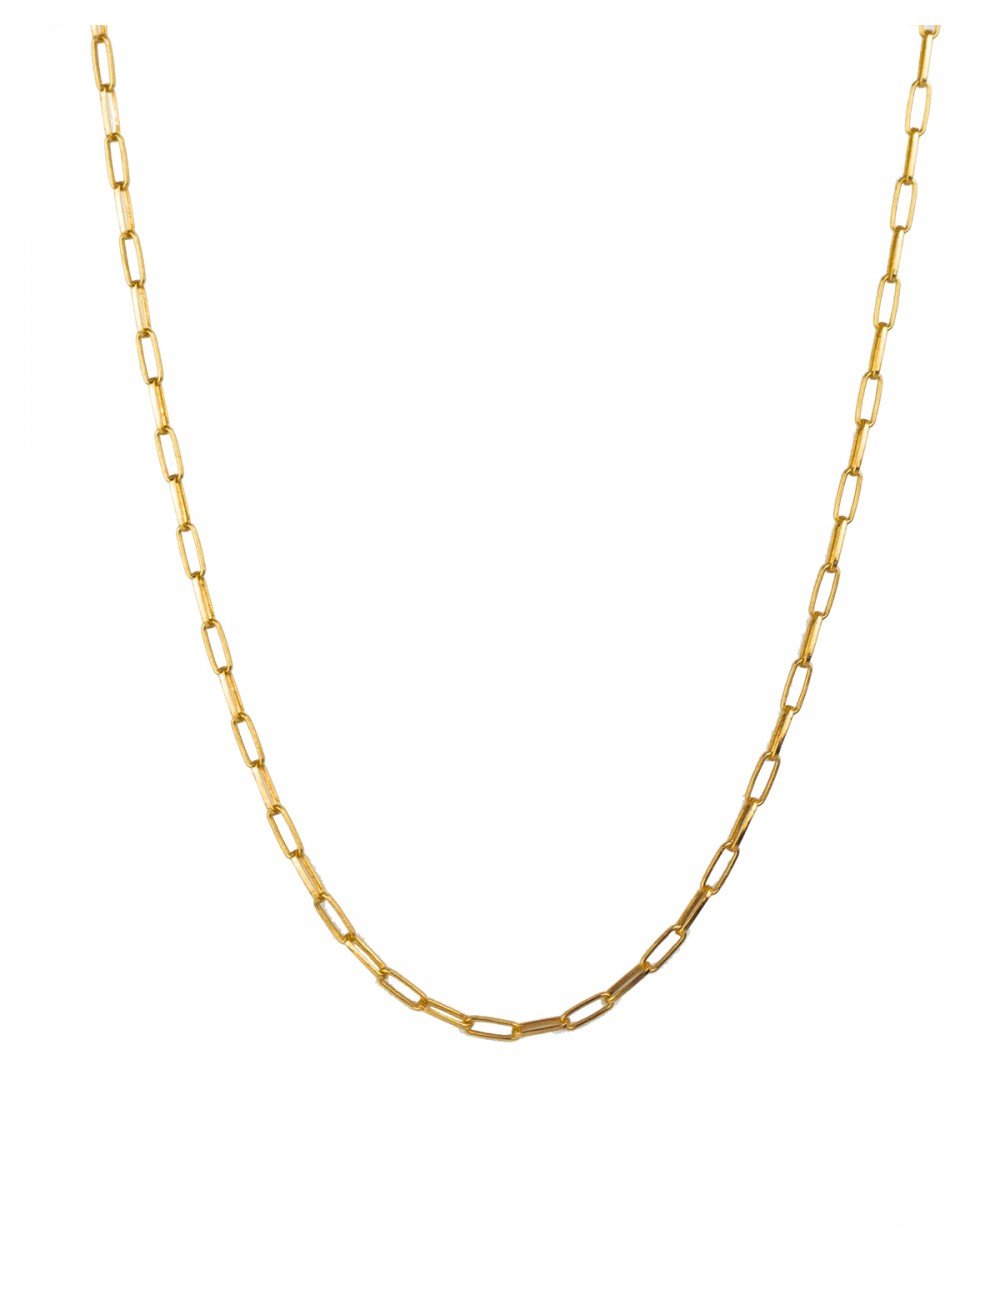 Boyfriend gold - Gold necklaces - Trium Jewelry